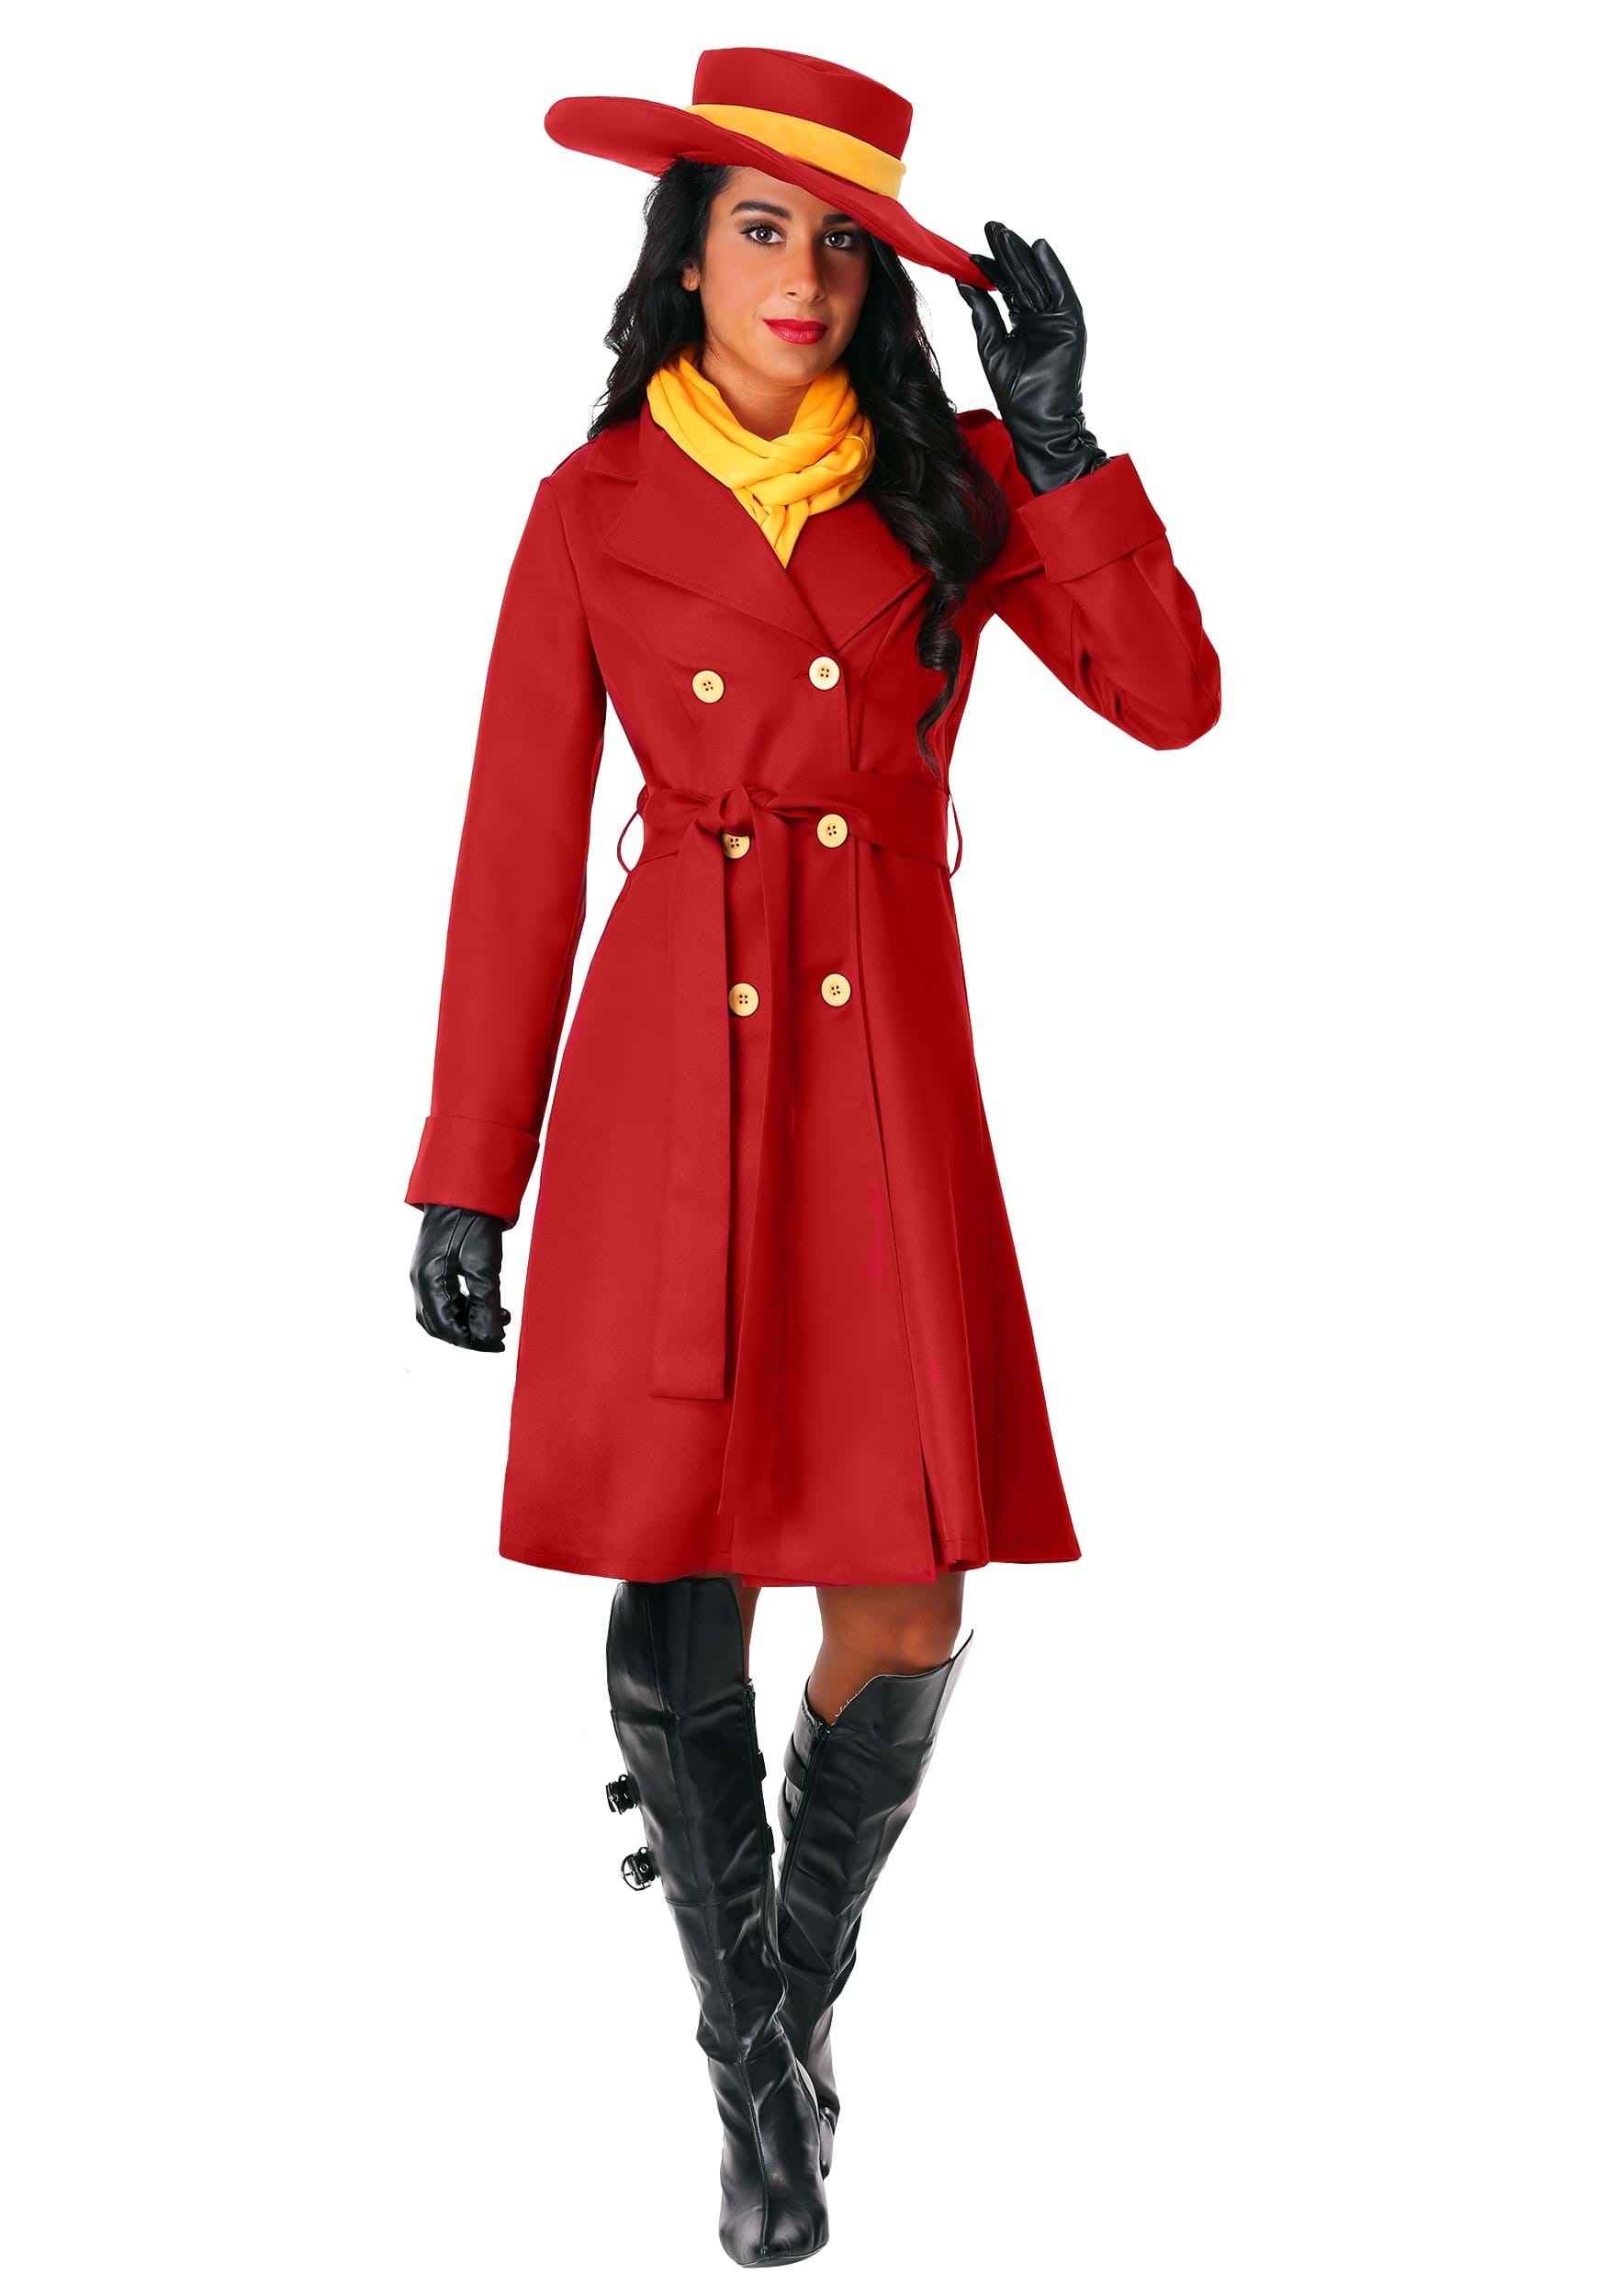 Photos - Fancy Dress APE FUN Costumes Plus Size Carmen Sandiego Women's Costume Orange/Red FUN6 